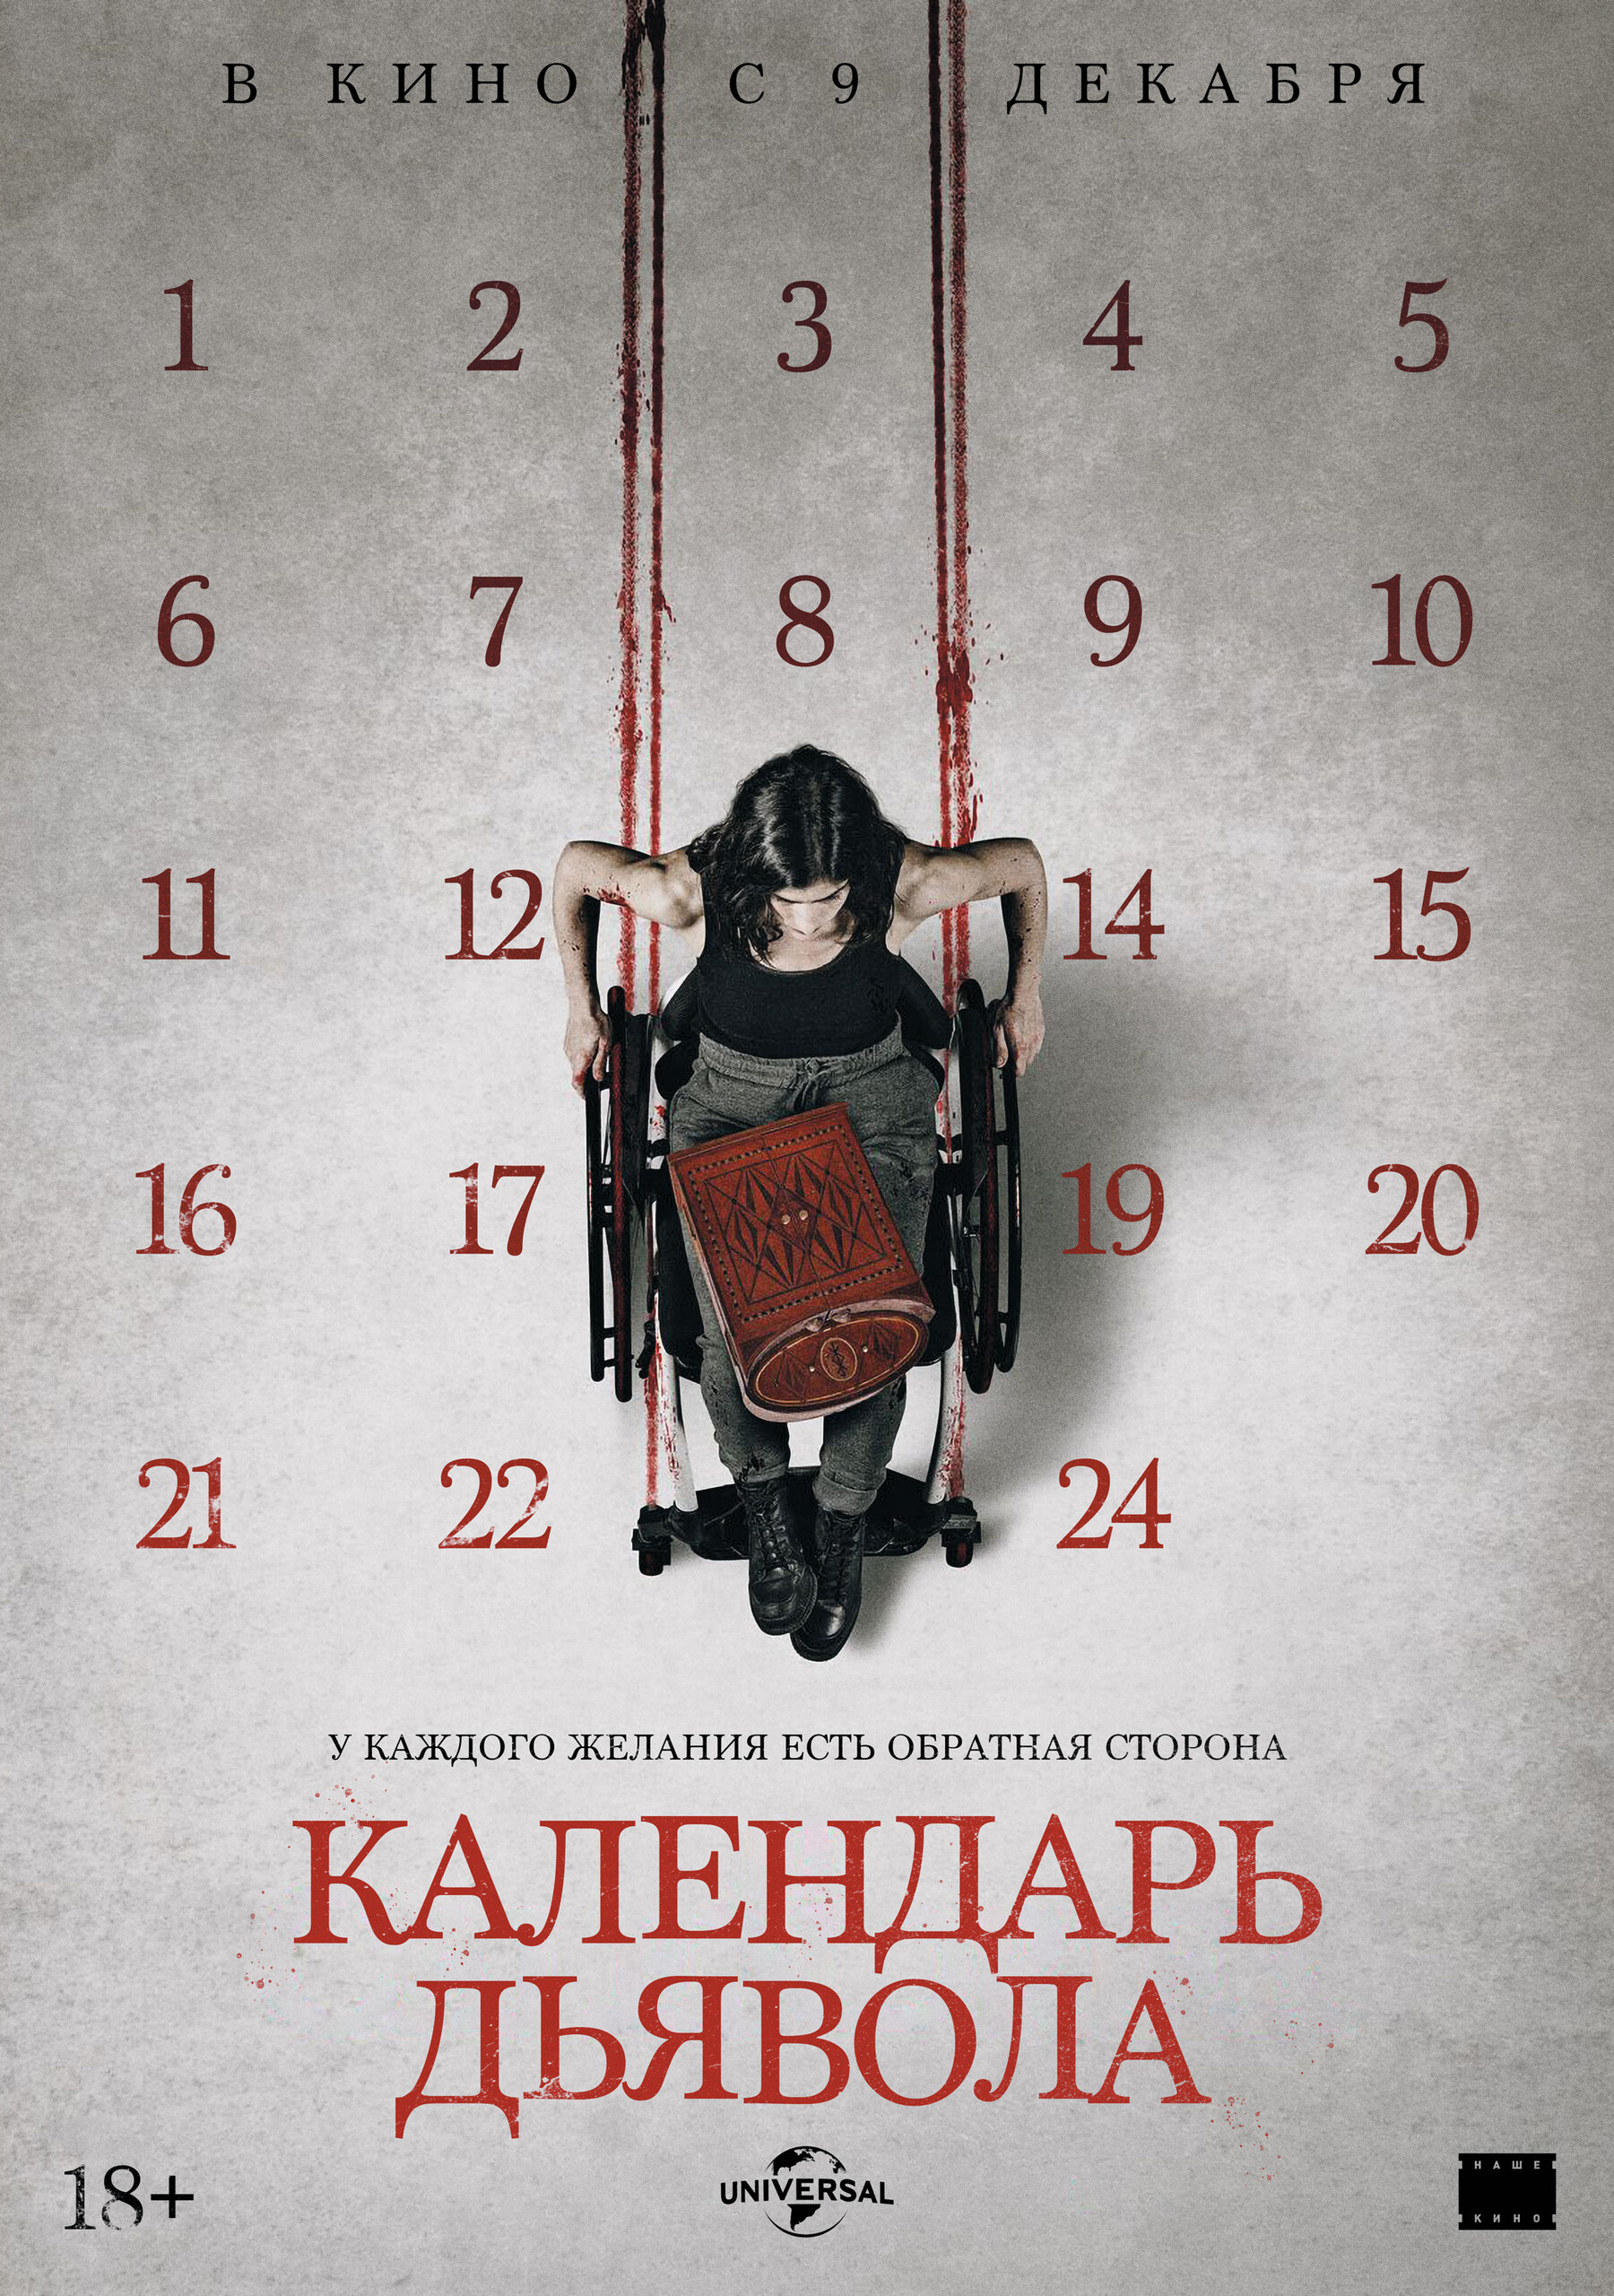 Календарь дьявола, постер № 2